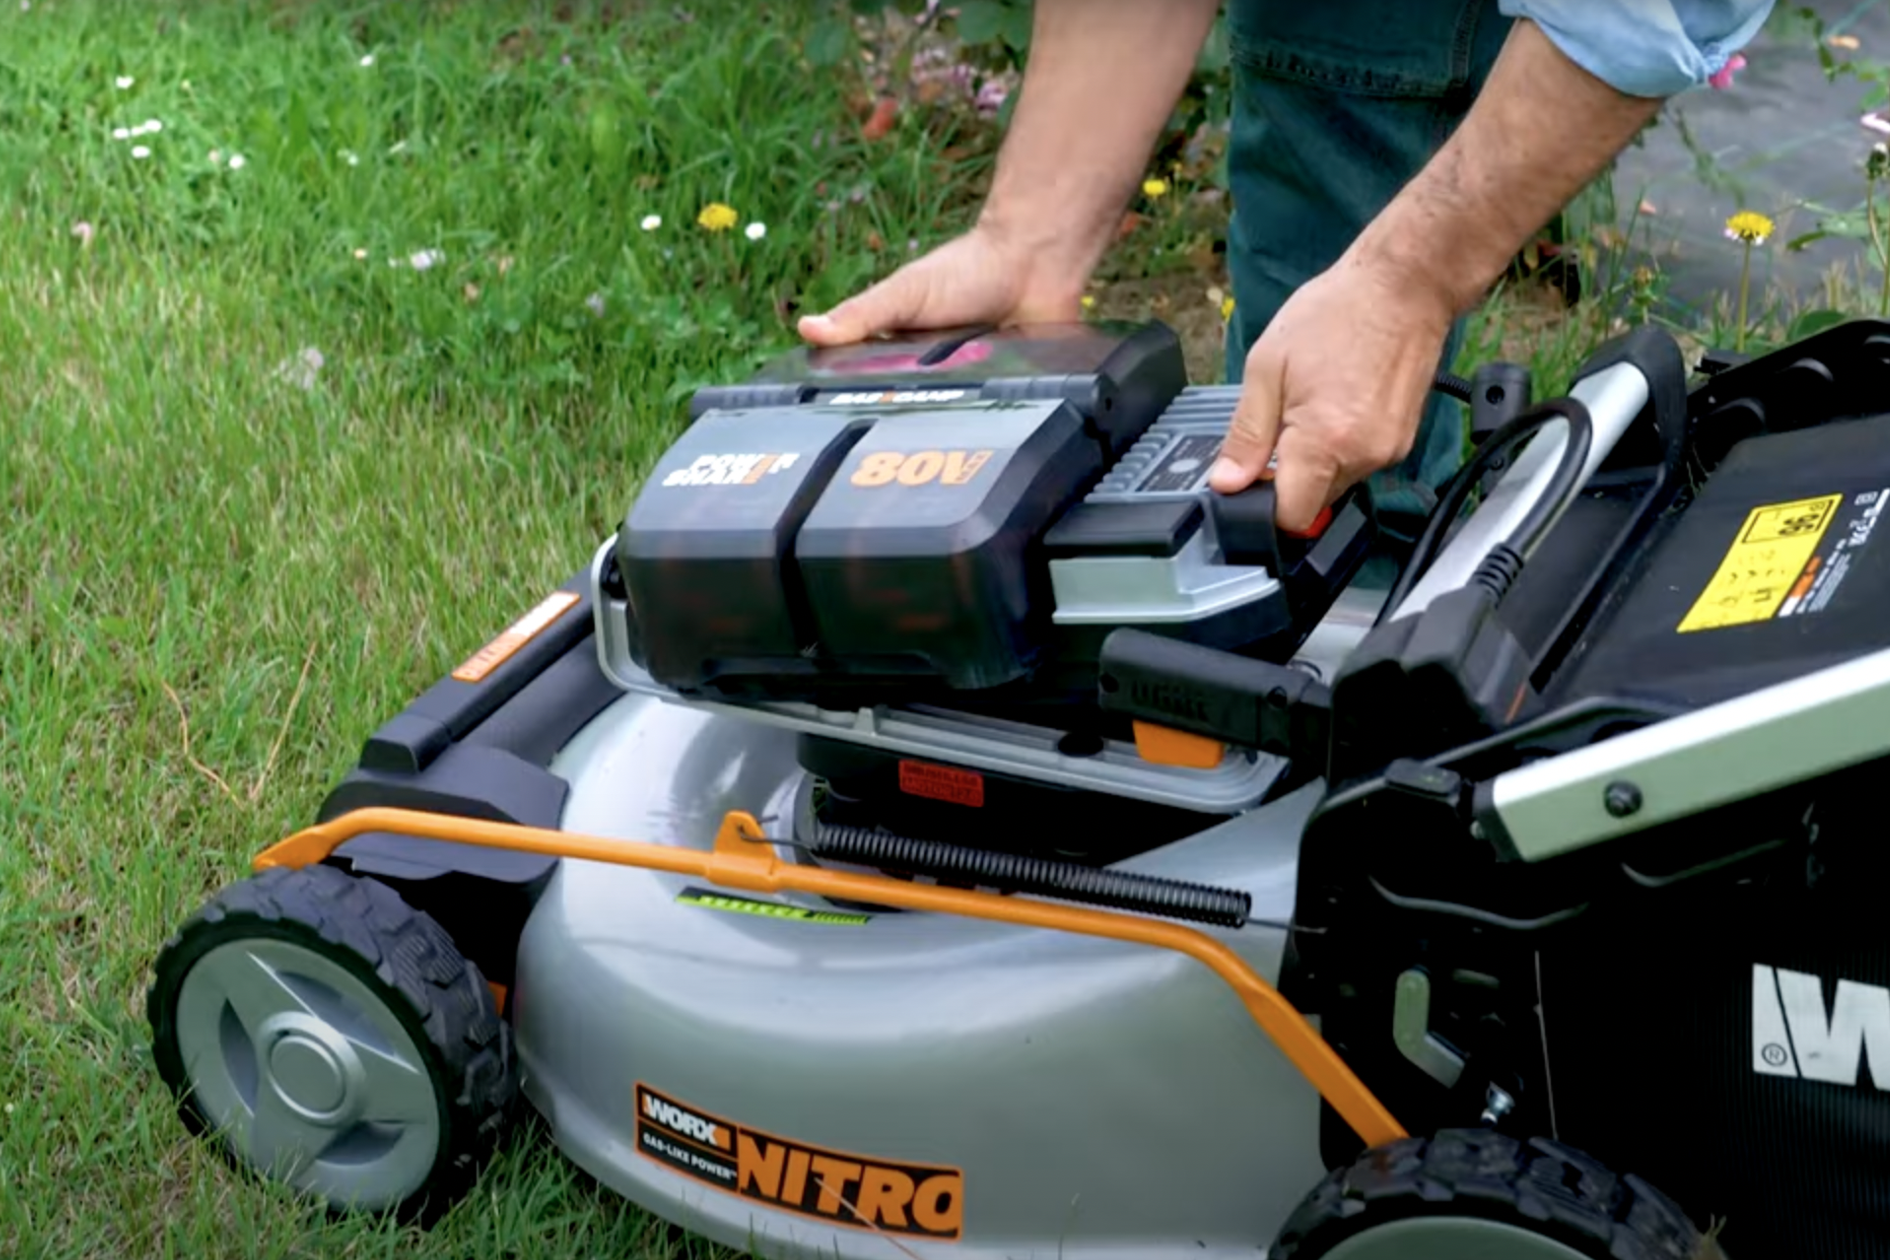 Worx Nitro 80V Self-Propelled Lawnmower - Pro Tool Reviews